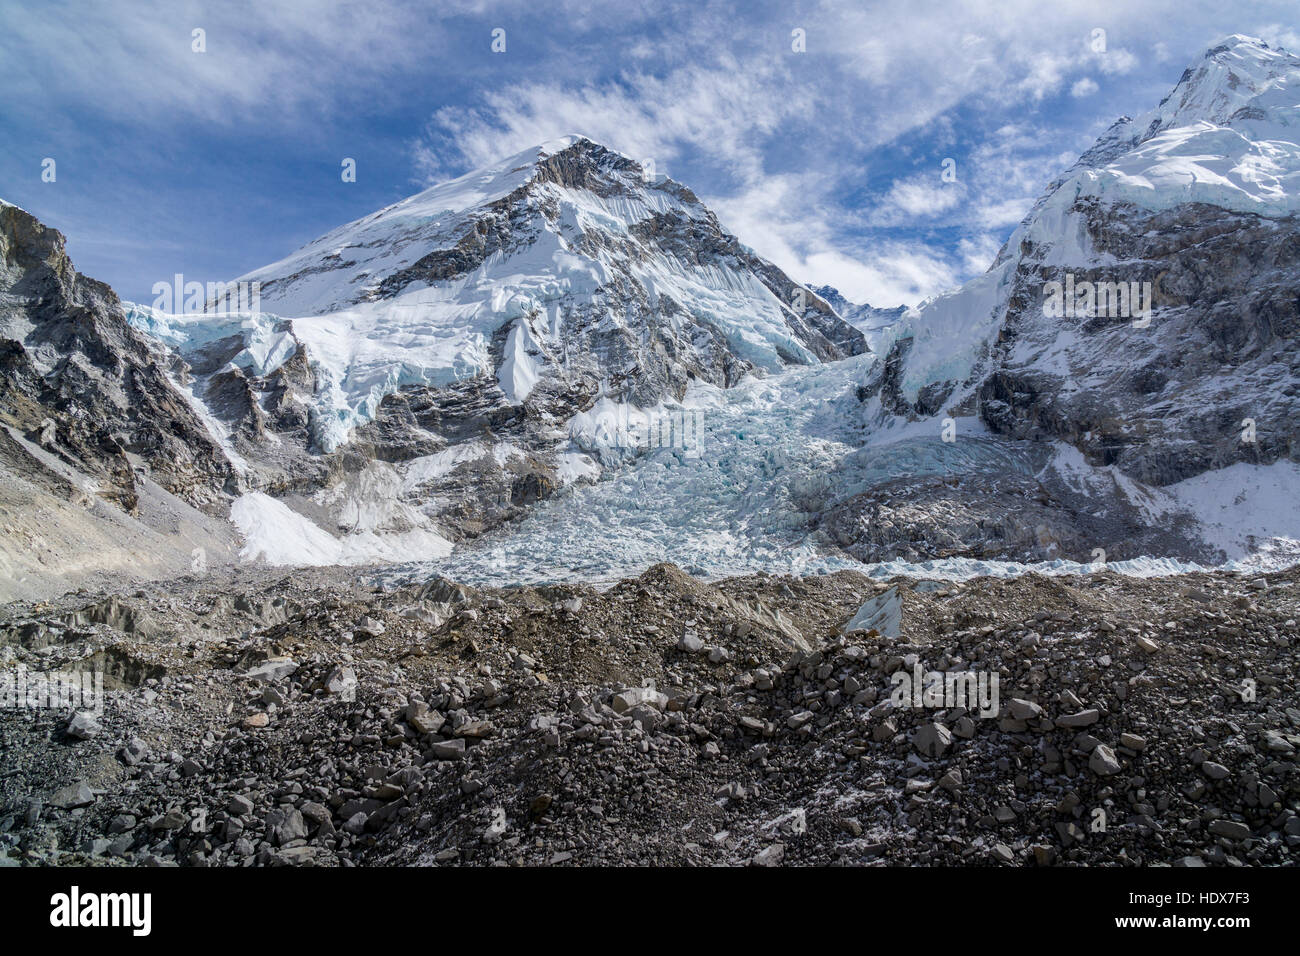 Vista attraverso il ghiacciaio kumbhu verso il ghiacciaio kumbhu, la montagna khumbutse (6665m) dietro di essa Foto Stock